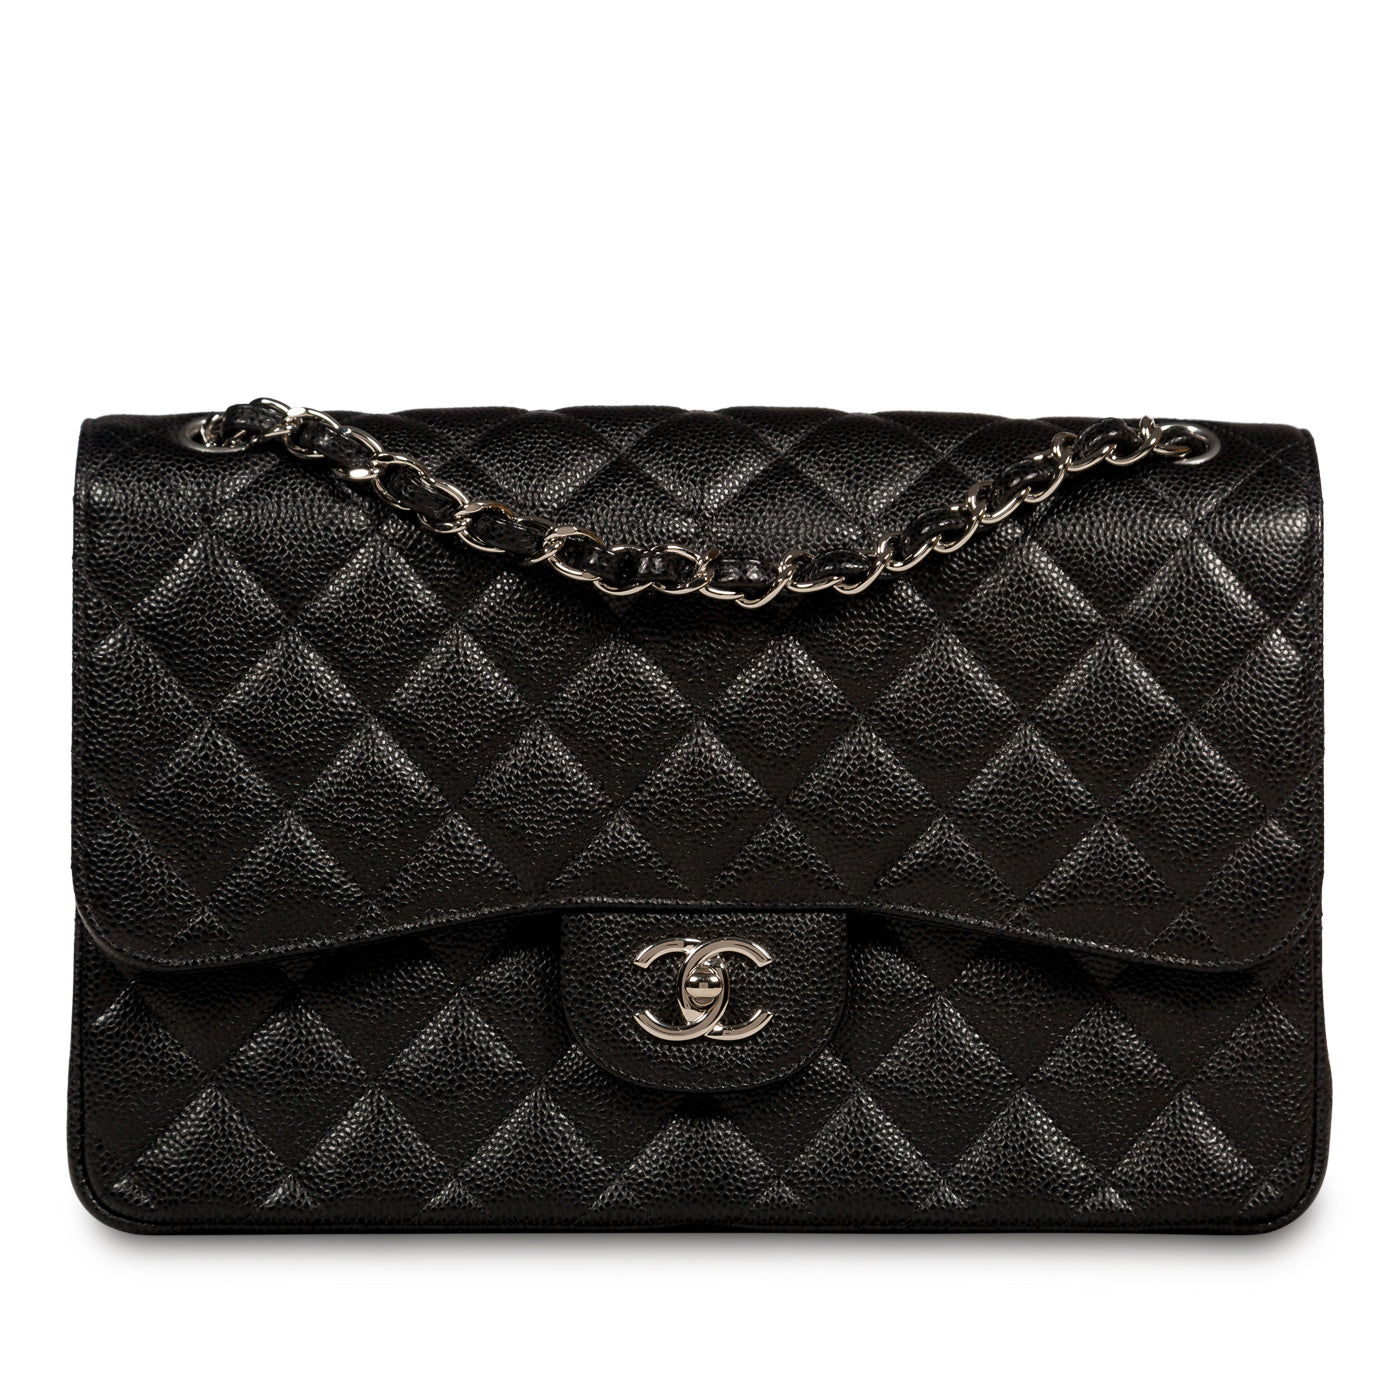 Chanel - Classic Flap Bag - Jumbo - SHW - Black Caviar - Pre